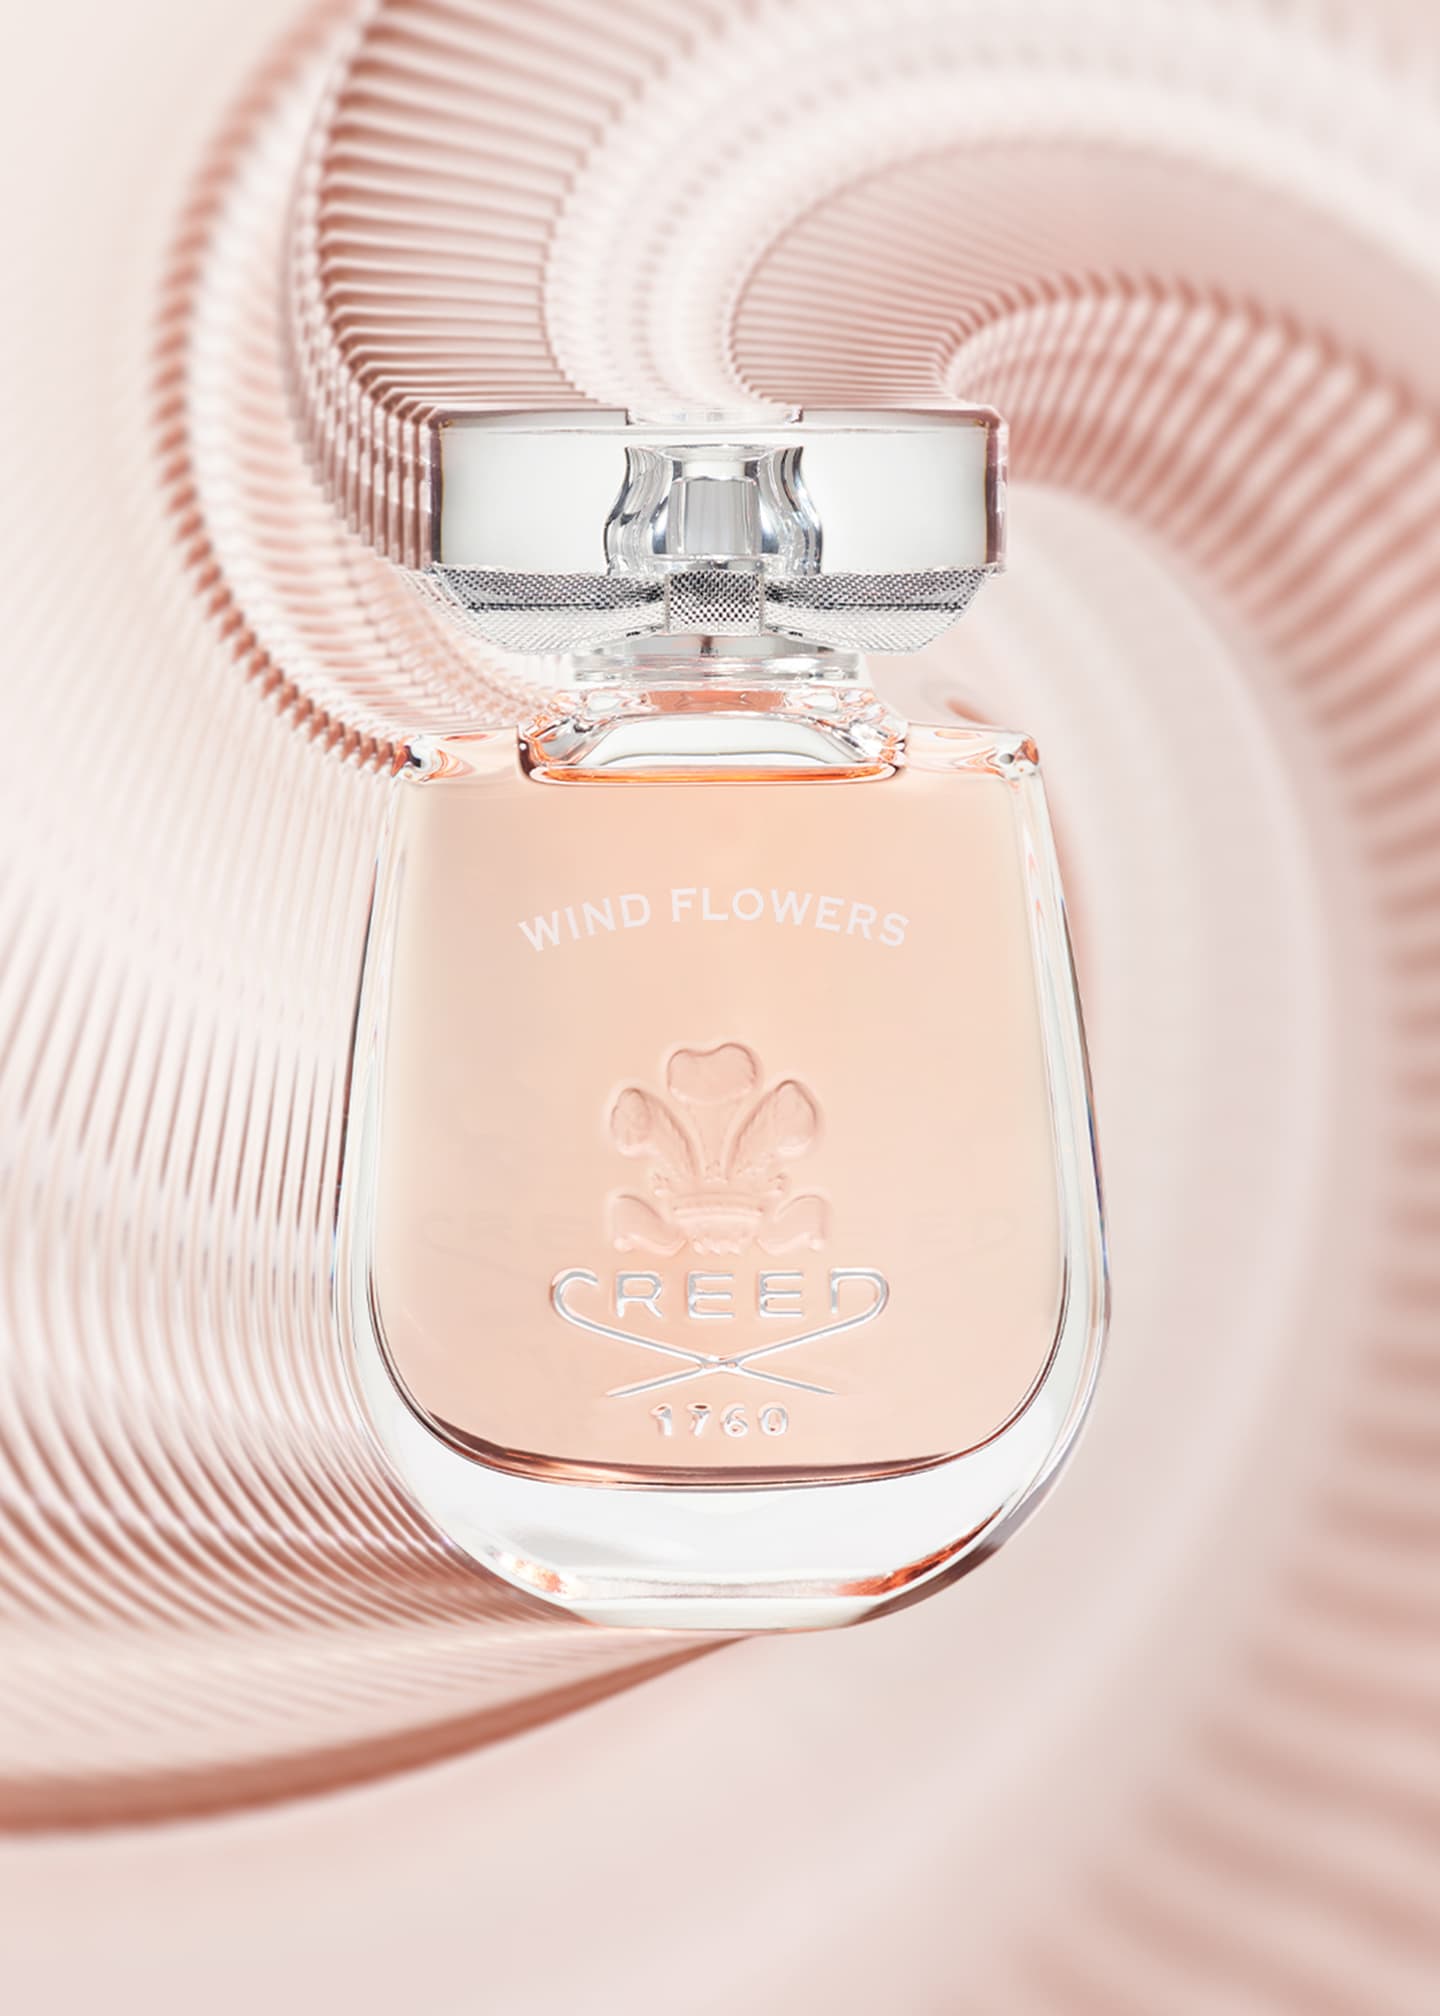 CREED Wind Flowers Eau de Parfum, 2.5 oz. - Bergdorf Goodman